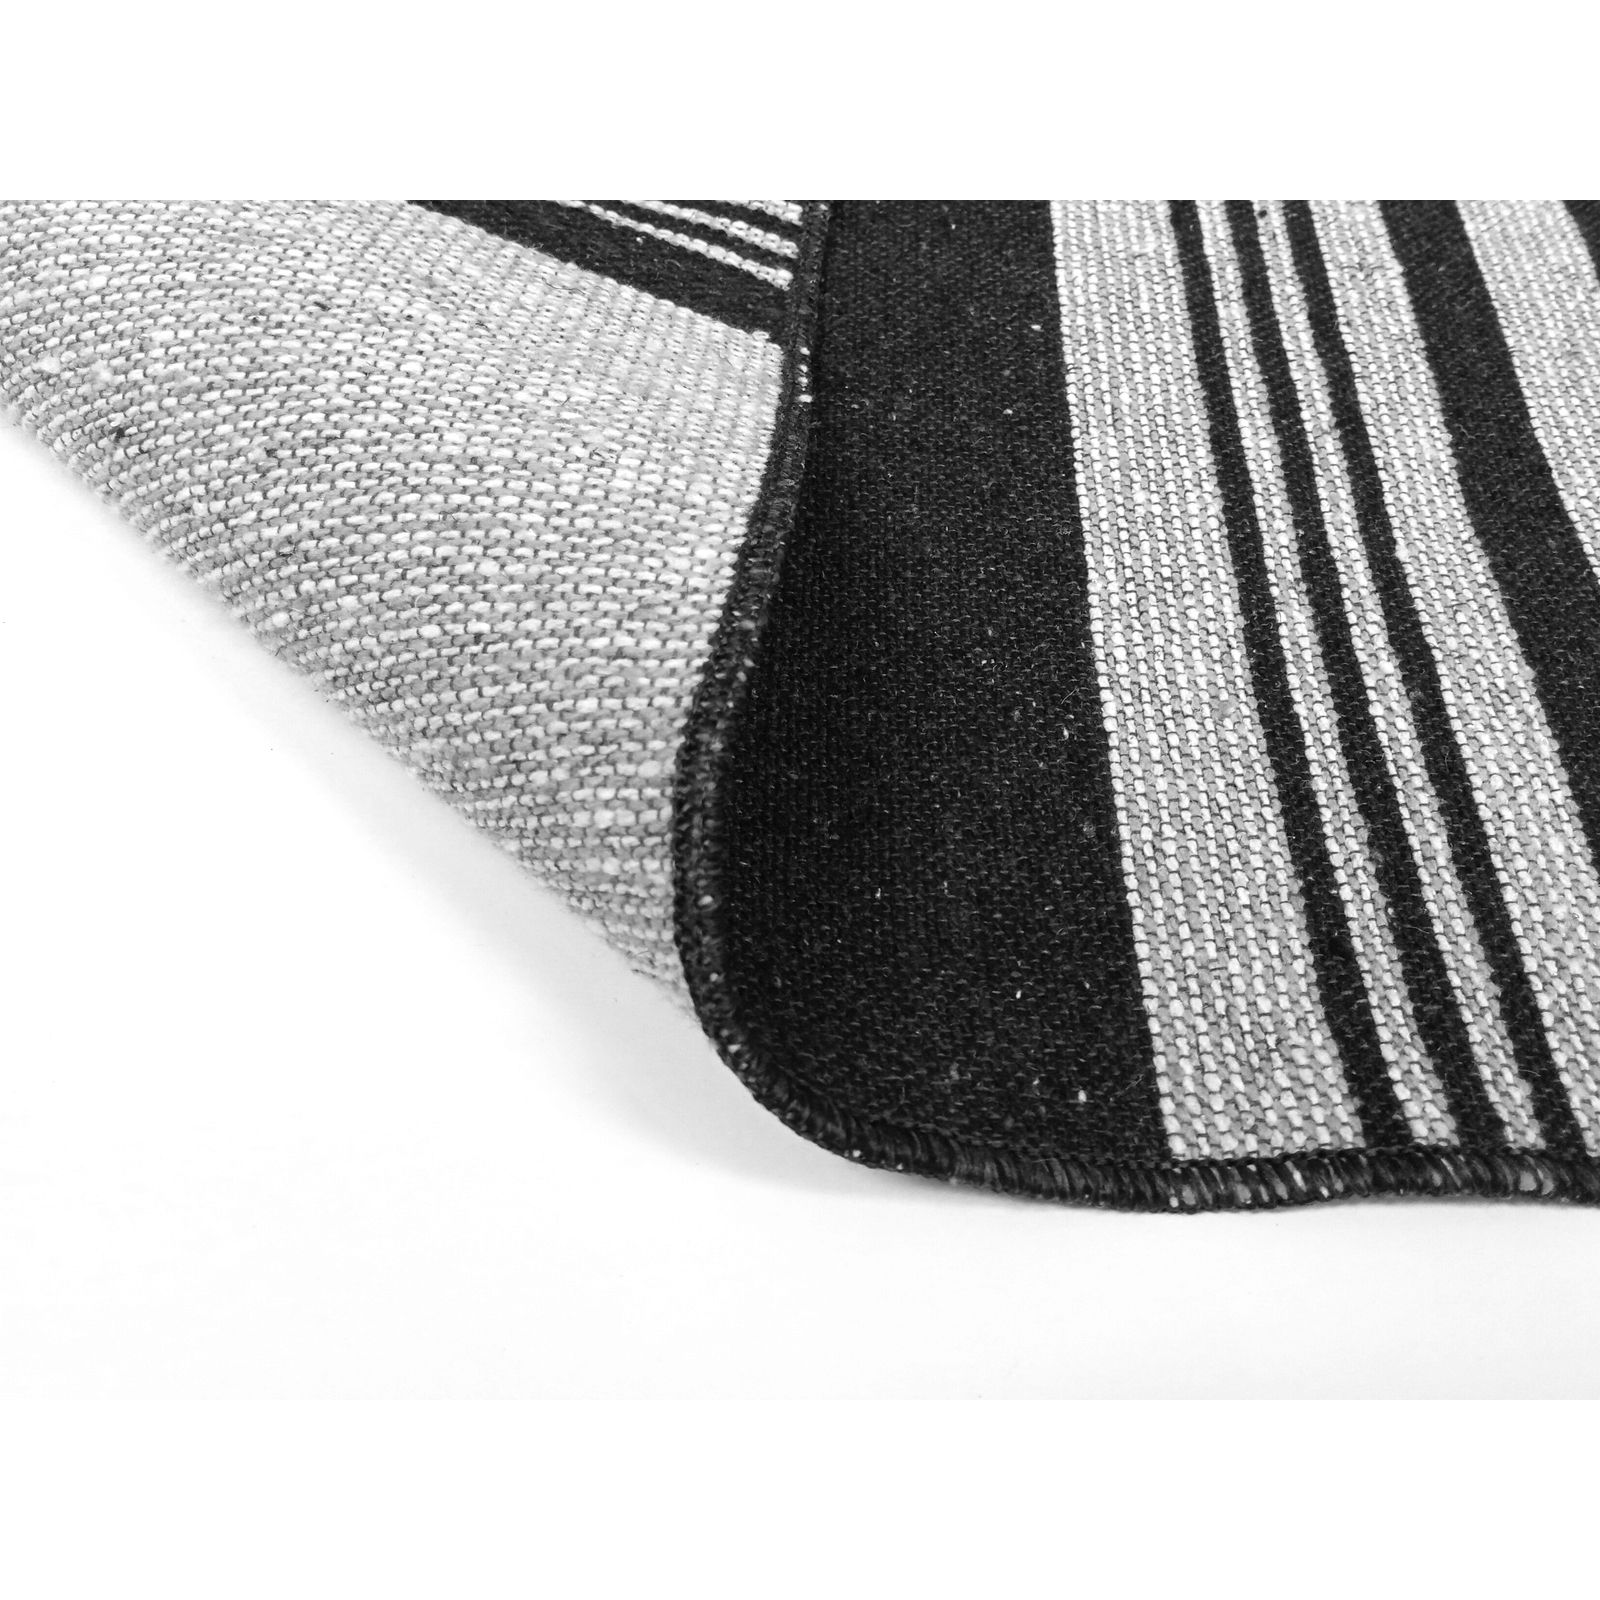 Ковер универсальный Izzihome Lara LR02 Siyah Beyaz 60х90 см серый (201LR02BL1992) - фото 2